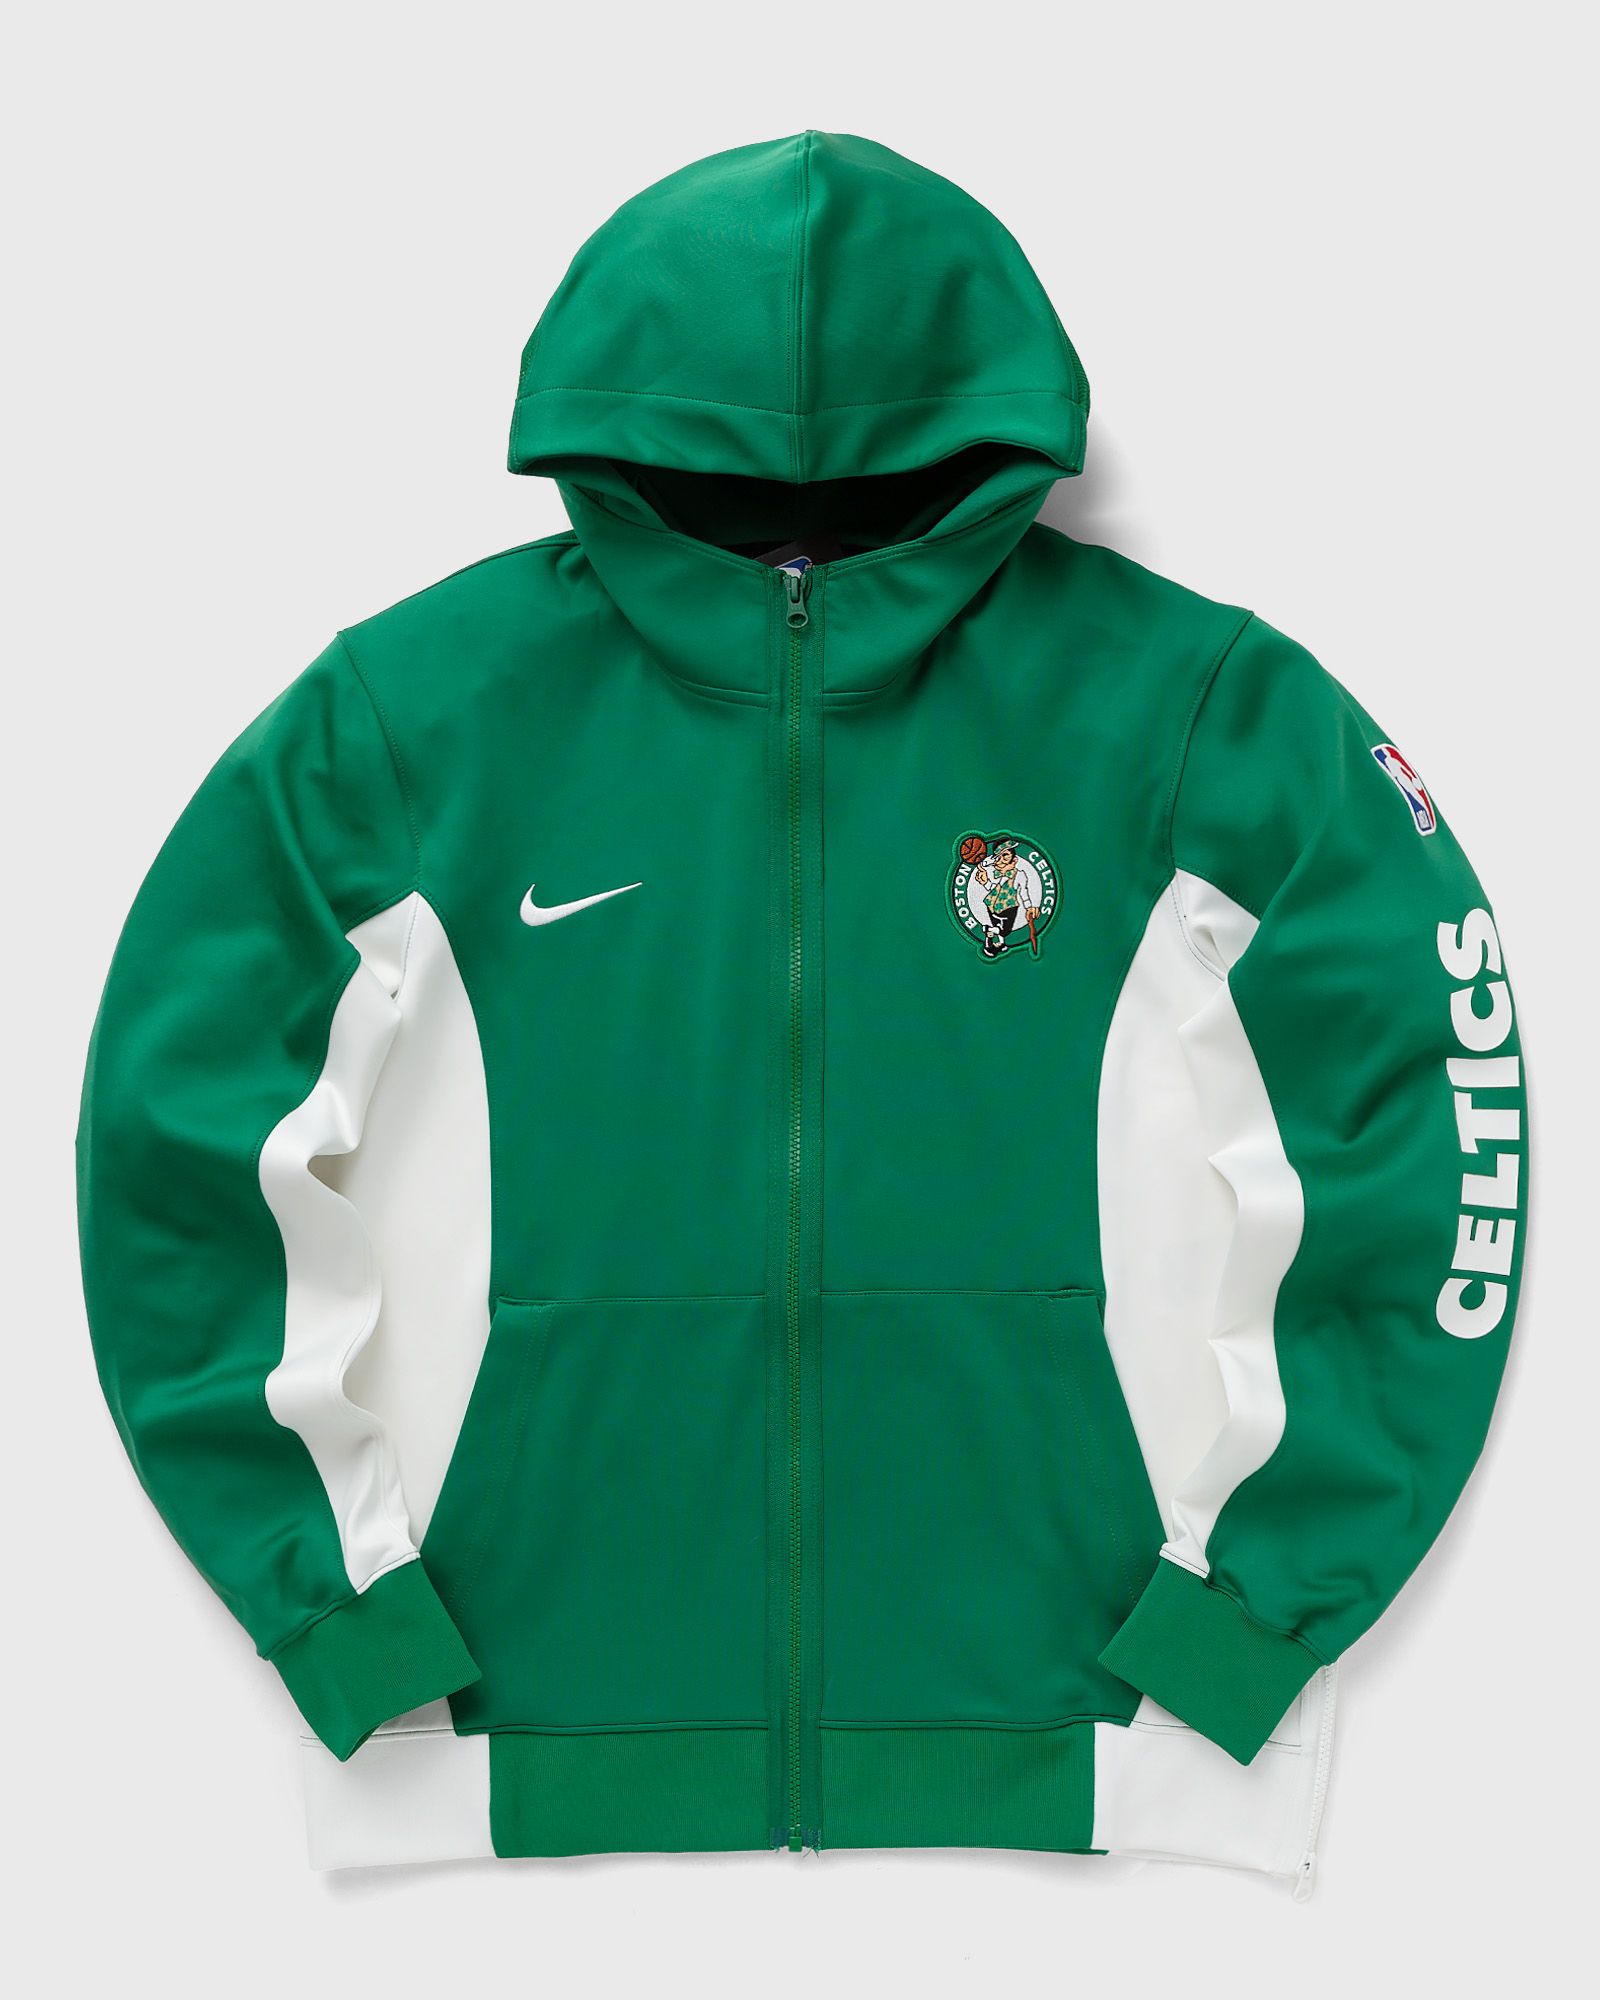 Nike - nba boston celtics showtime full-zip hoodie men hoodies|team sweats|zippers green|white in größe:xl